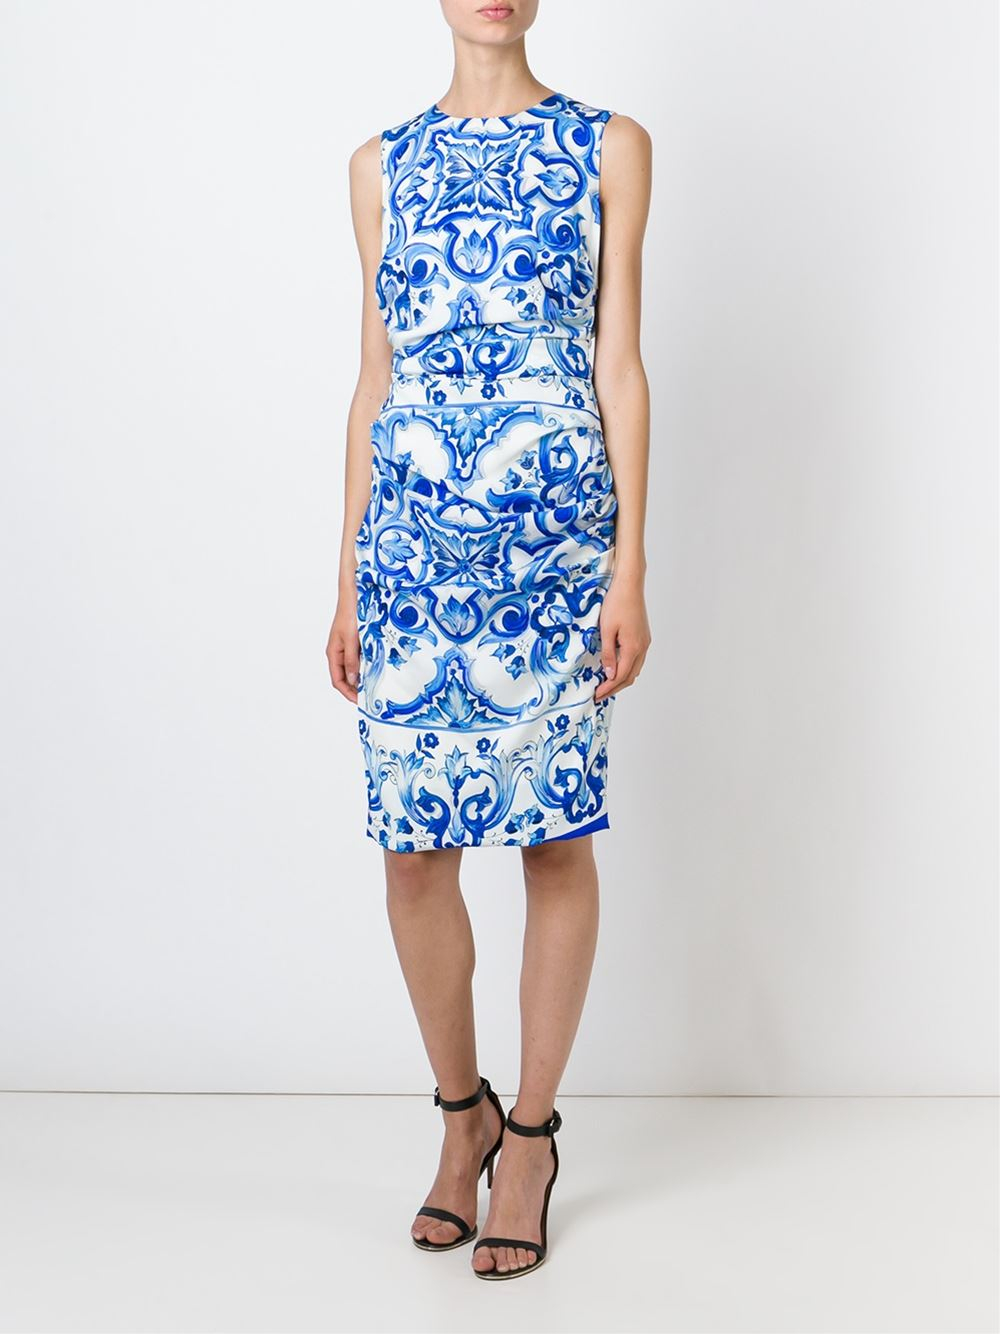 Dolce & gabbana 'majolica' Print Dress in Blue | Lyst